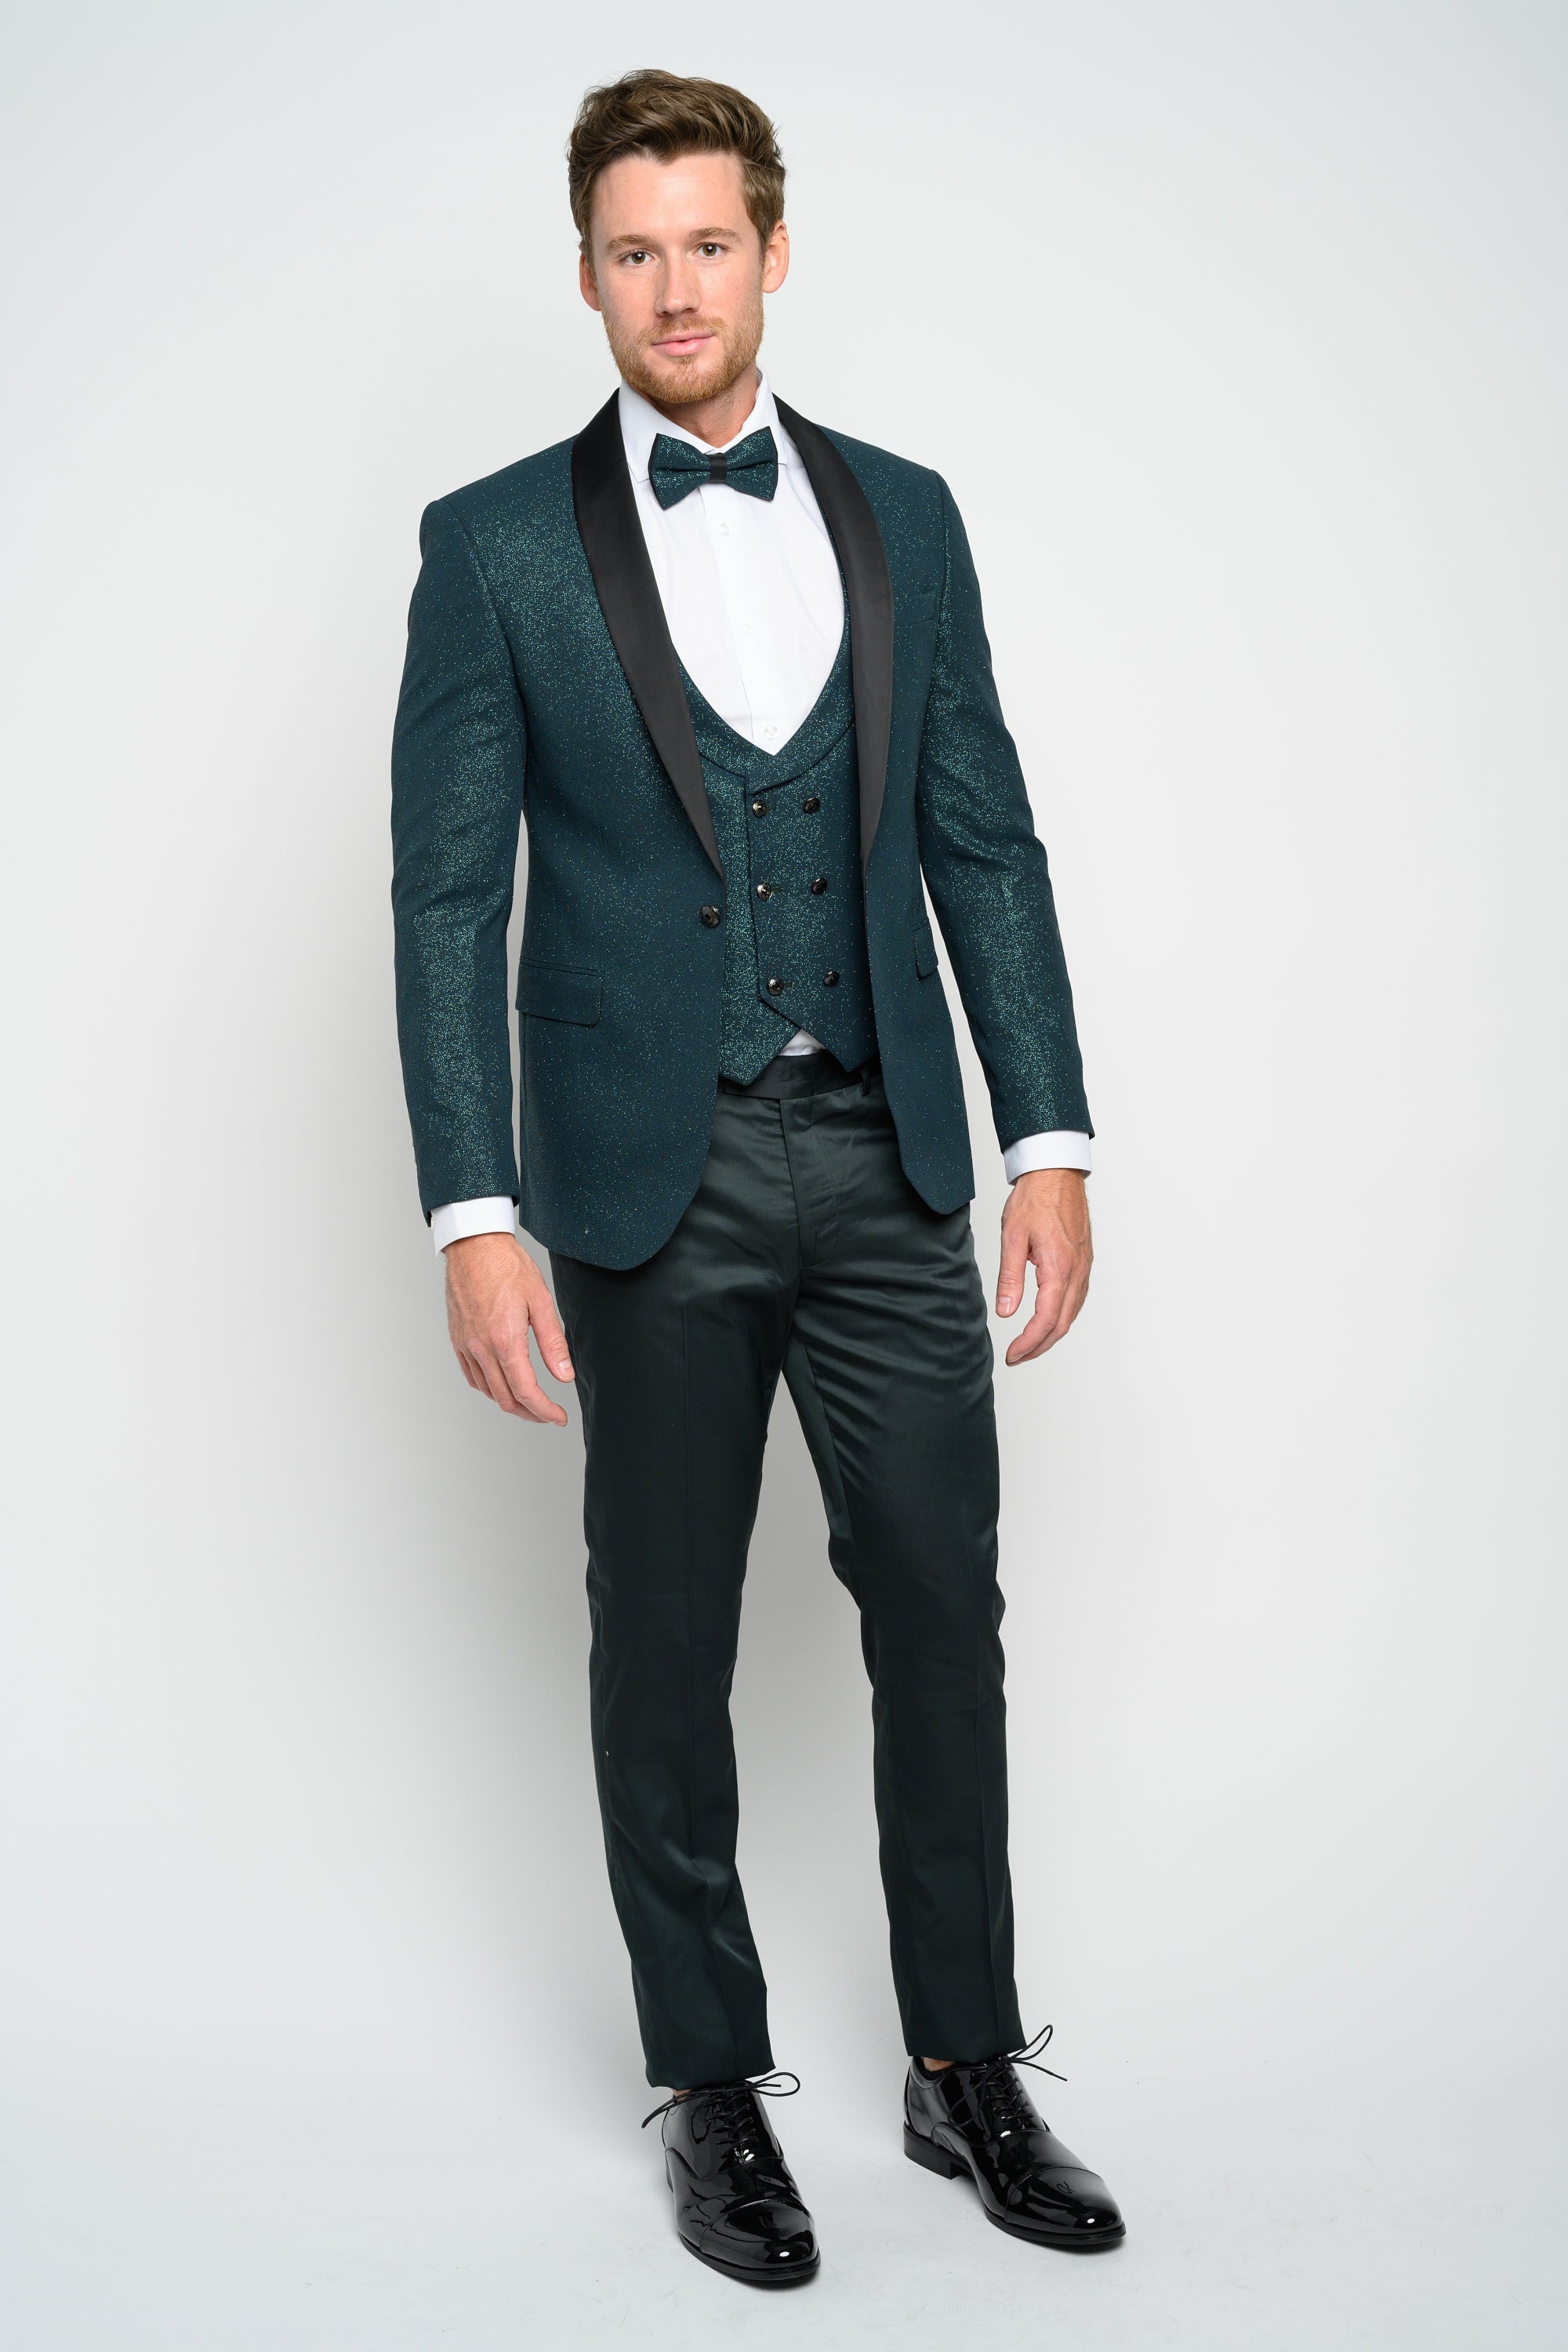 Men's 3-pieces Slim Fit Suit Perfect for Weddings, Grooms